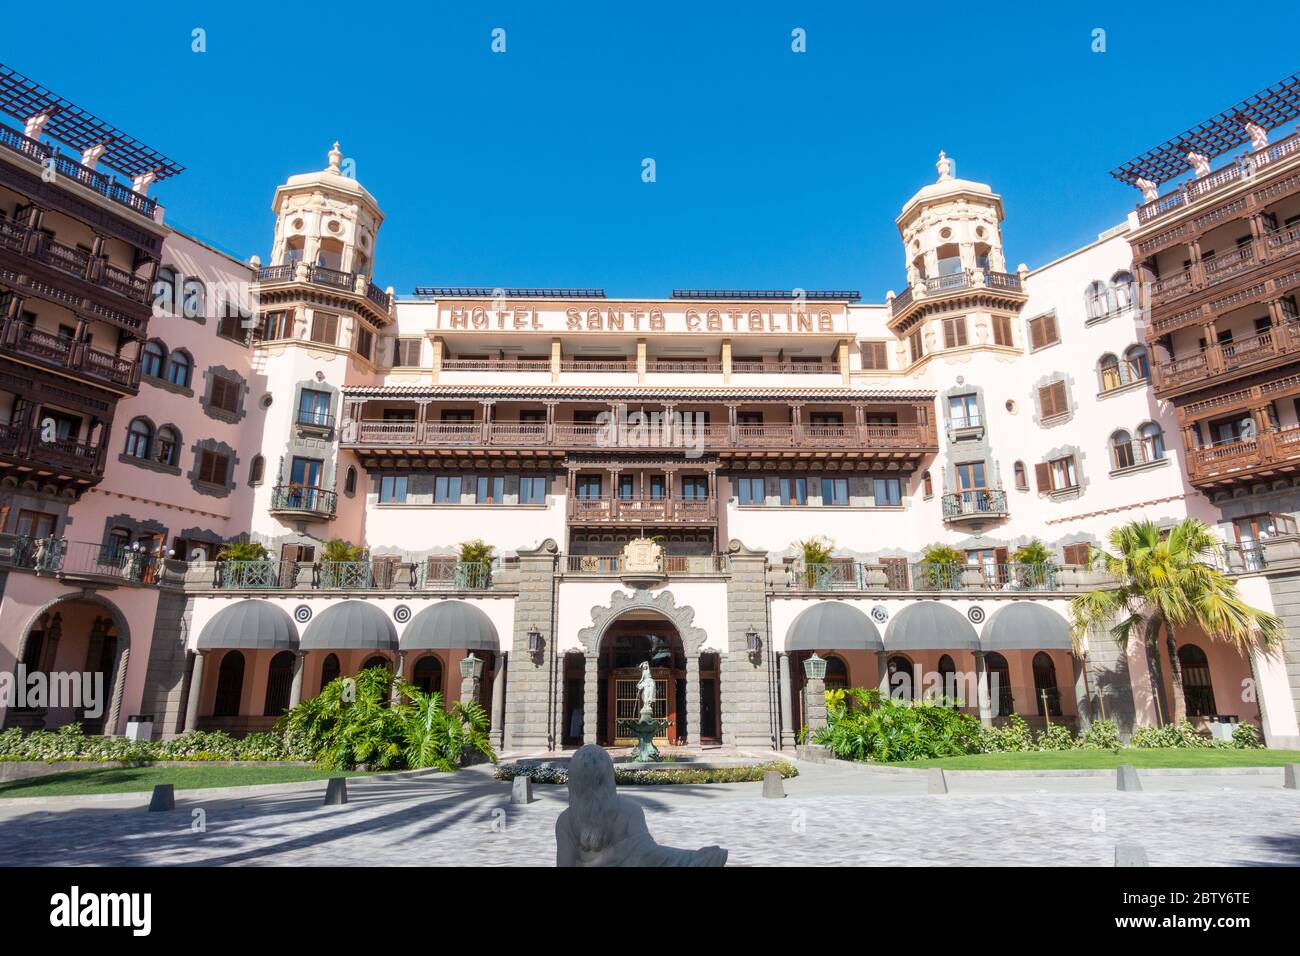 Las Palmas, Gran Canaria, Canary Islands, Spain. 28th May, 2020. Despite  lockdown easing, hotels like the five star Hotel Santa Catalina in Las  Palmas on Gran Canaria remain closed. With 40% of